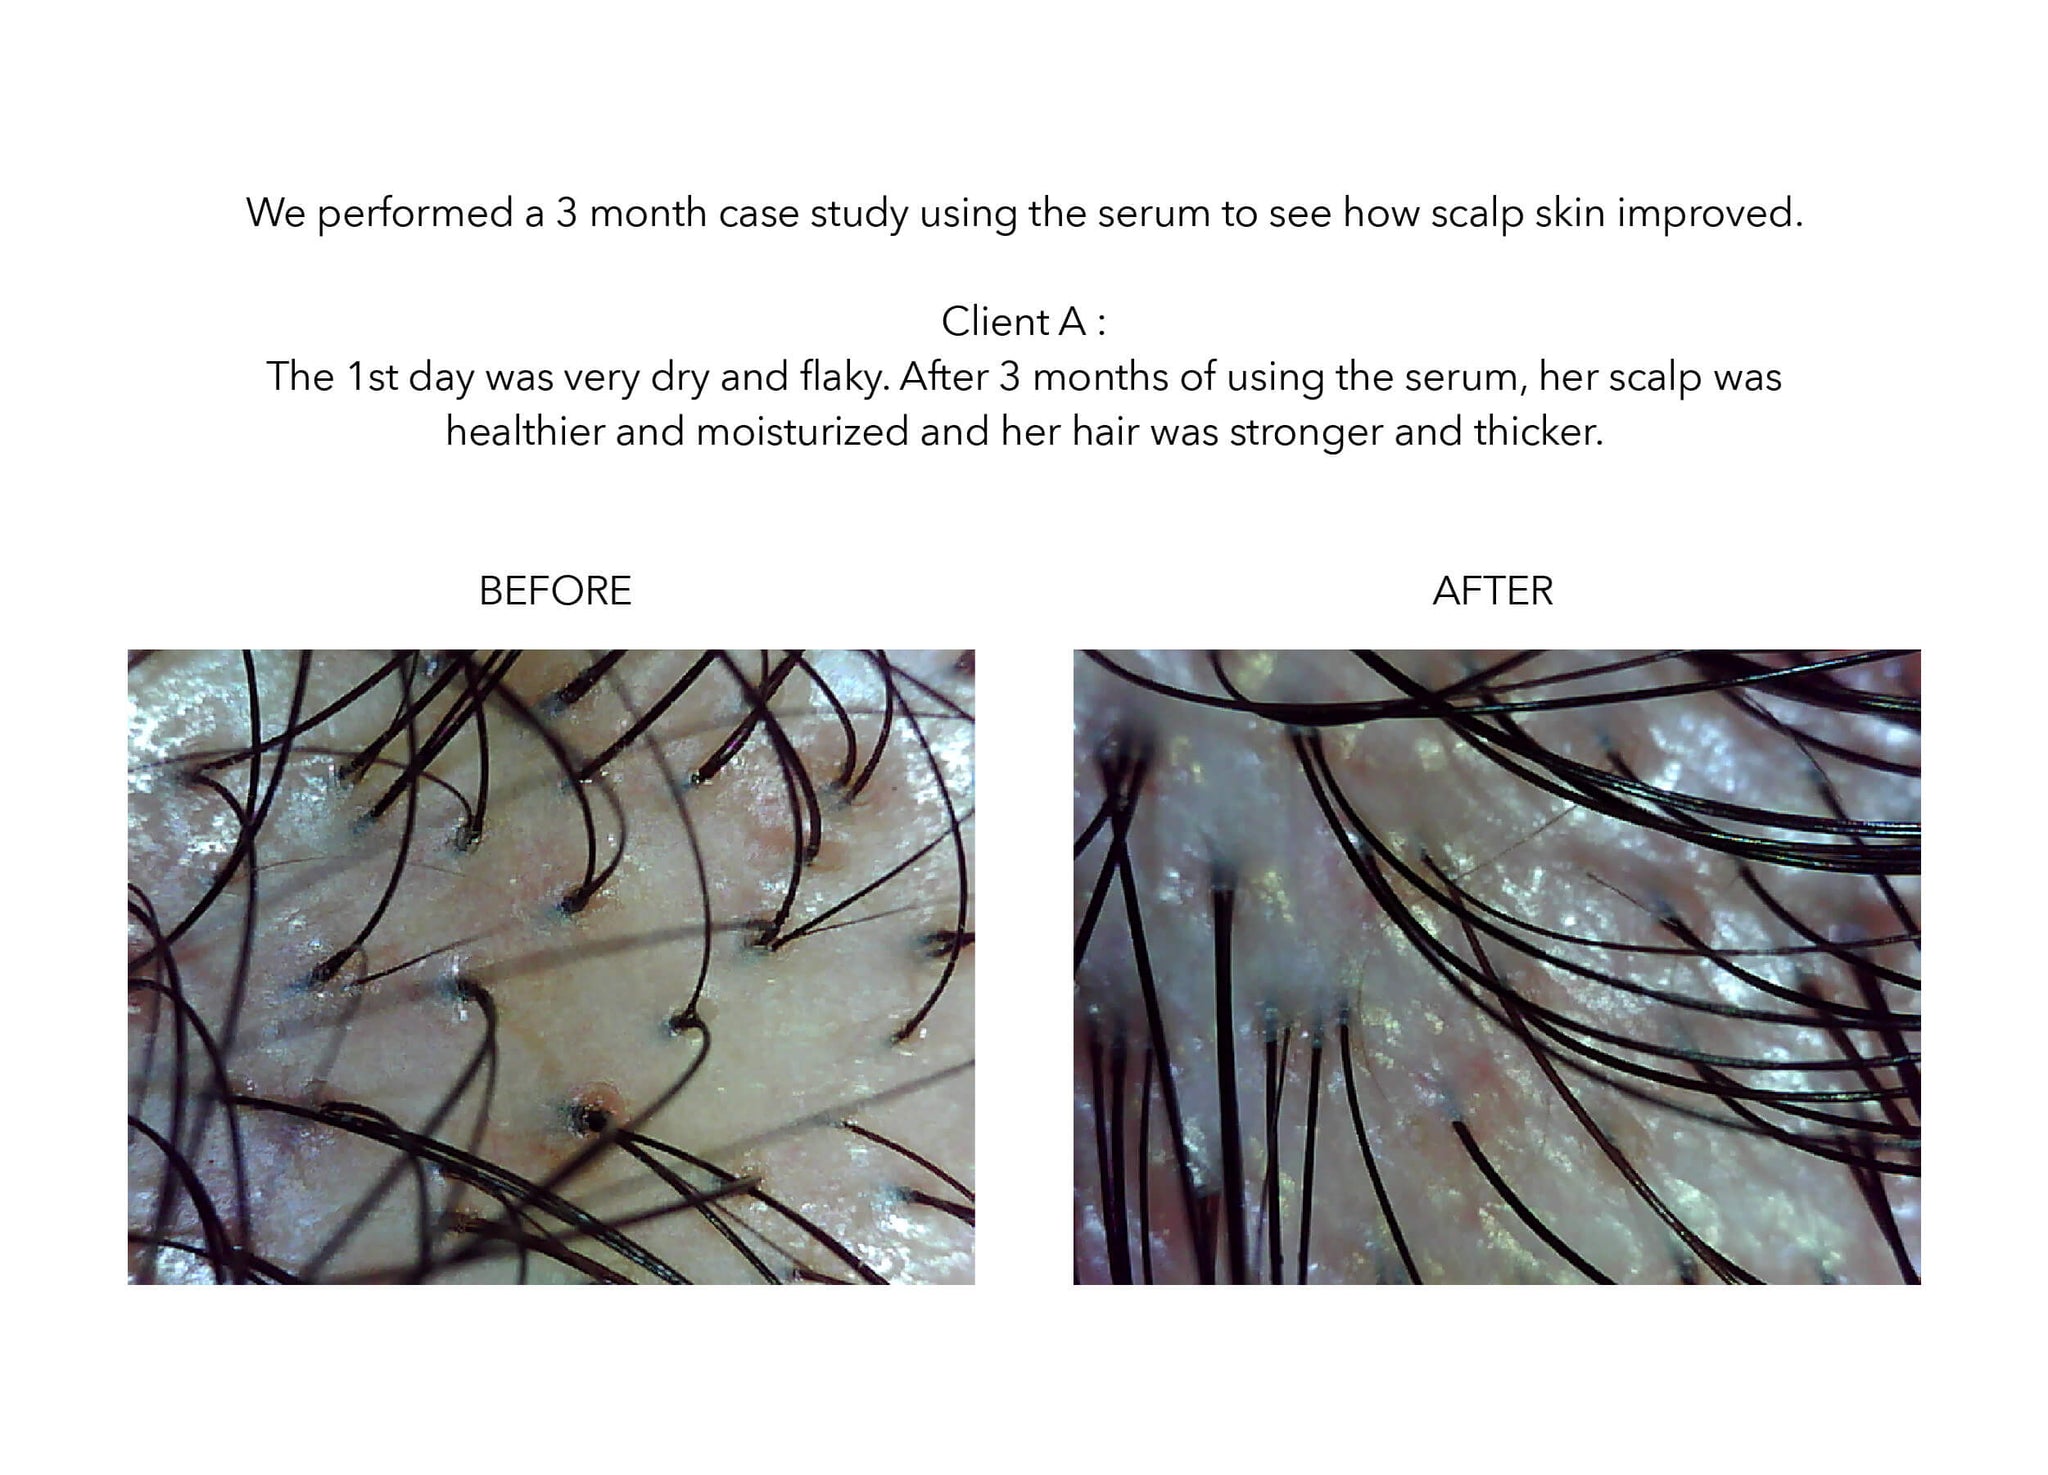 Nekko rejuvenation serum scalp treatment before and after